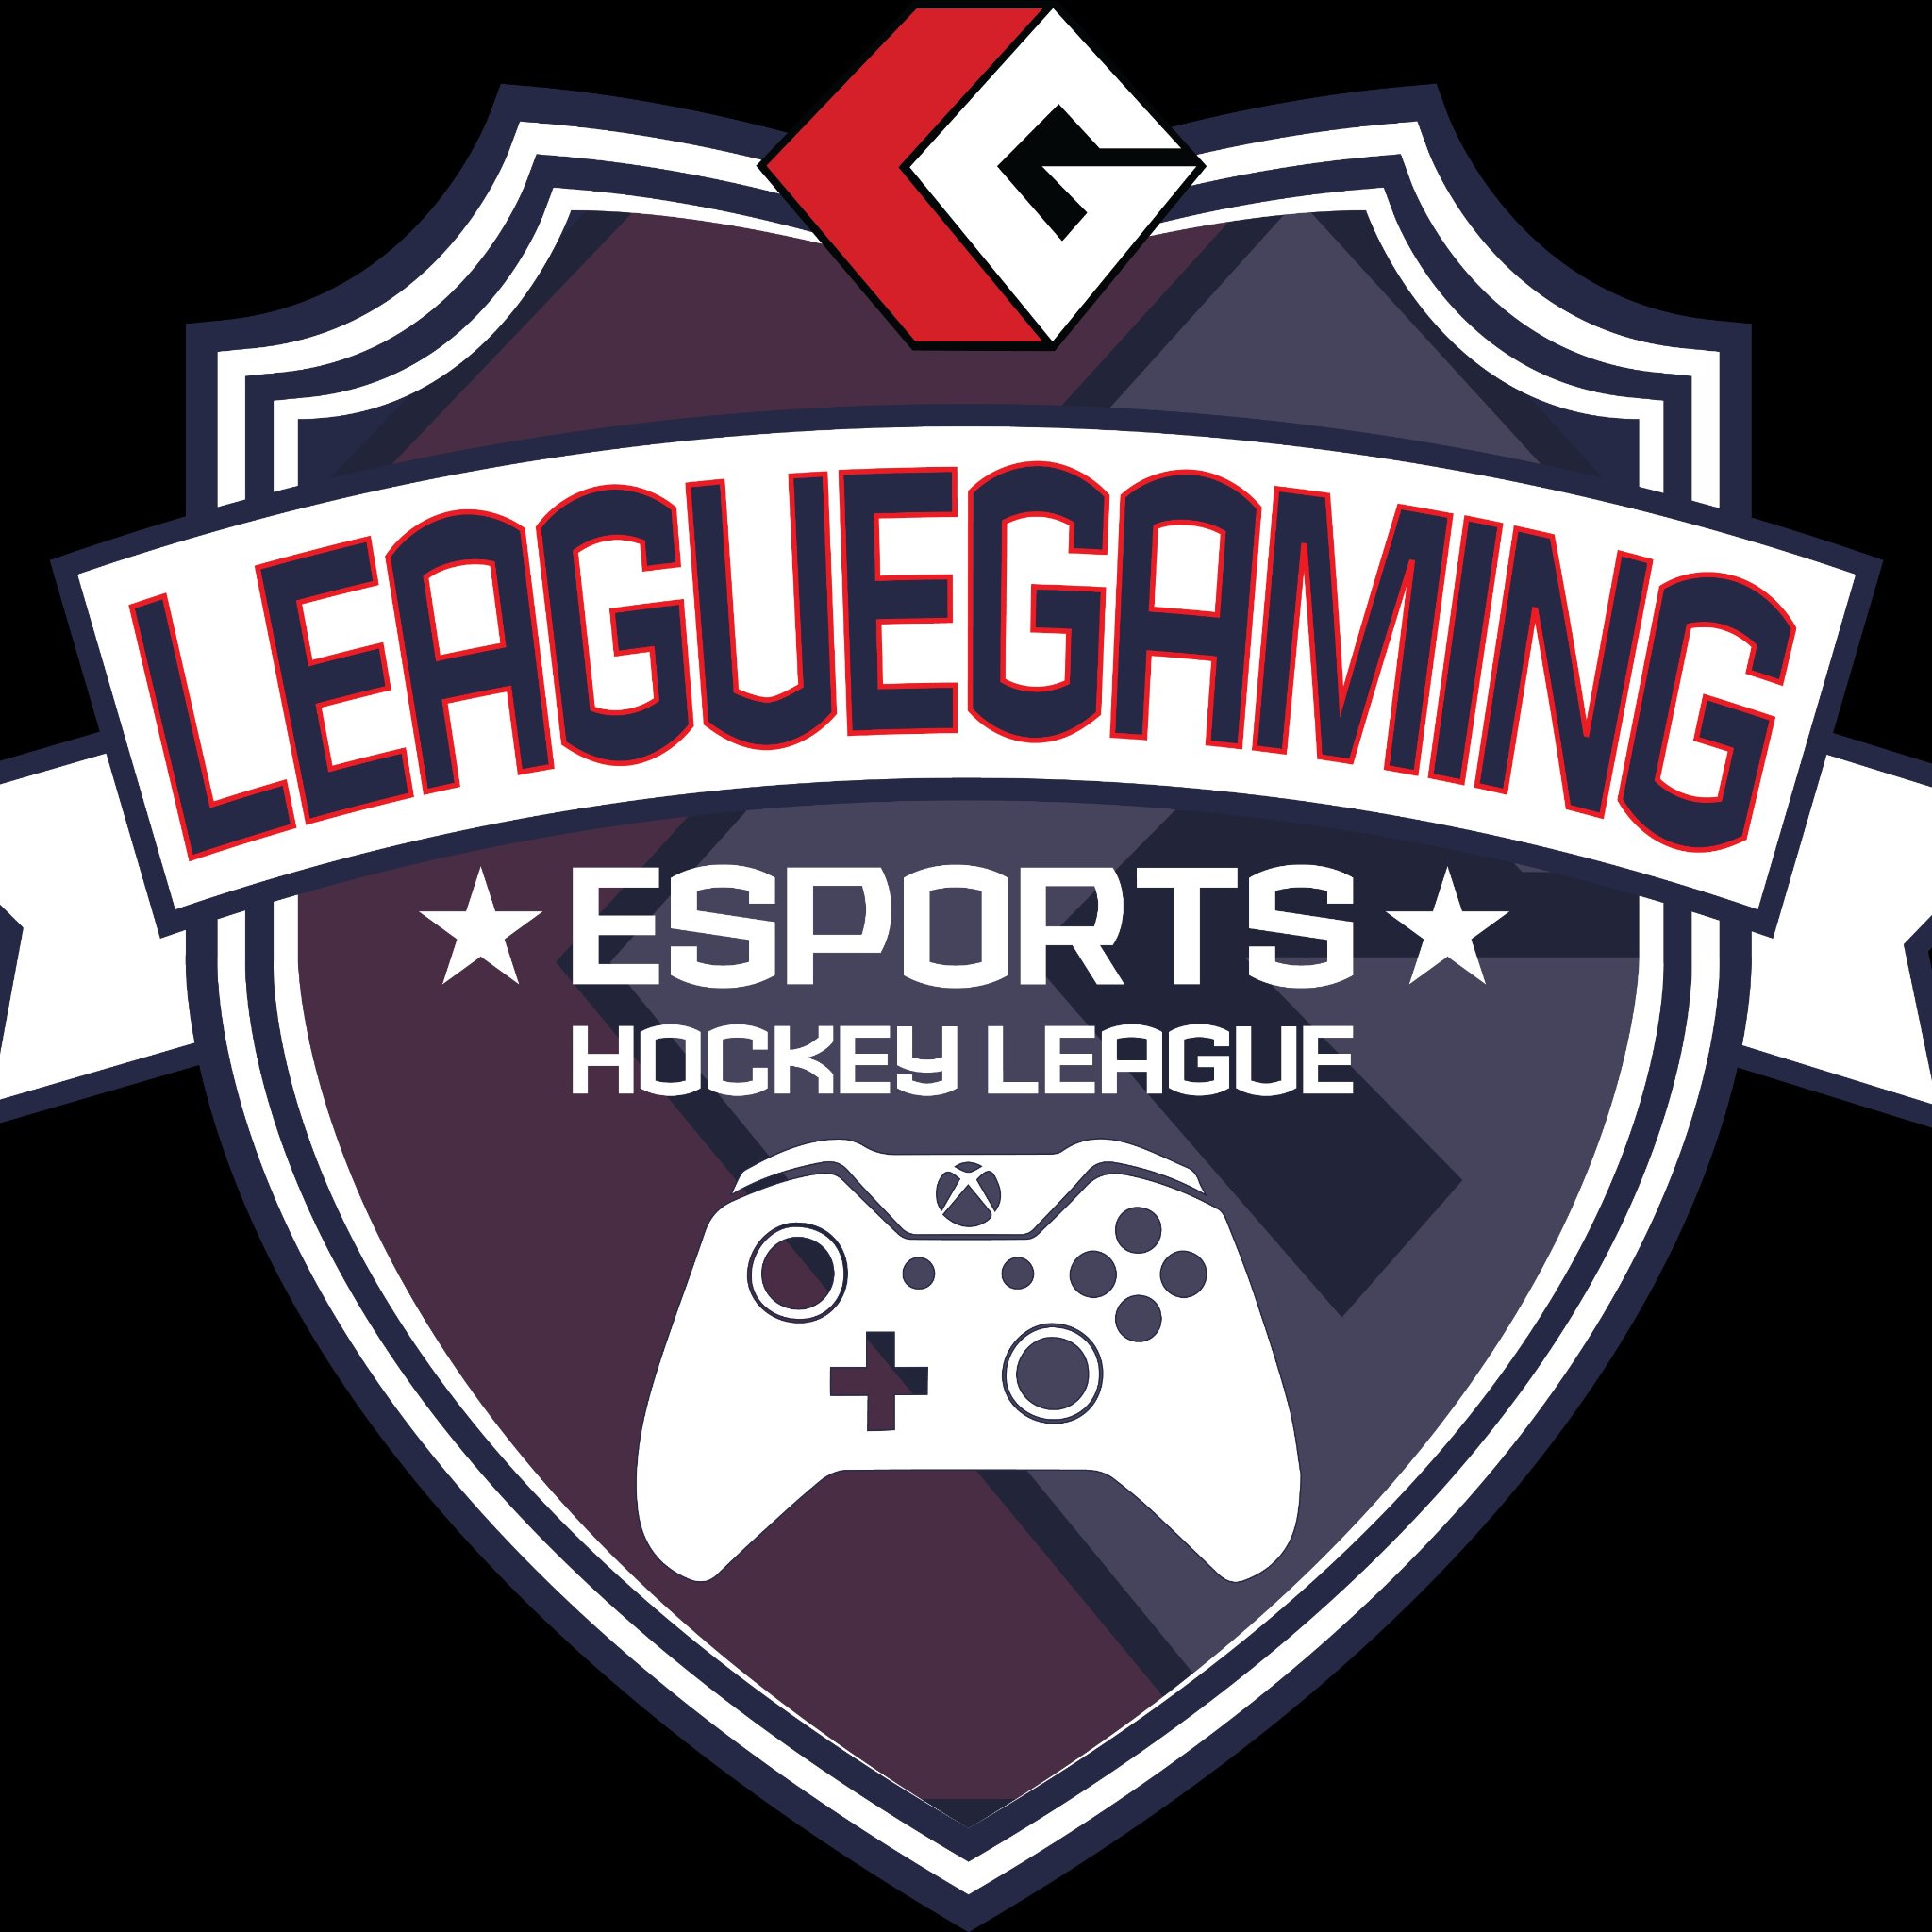 LeagueGaming - eSports Hockey League